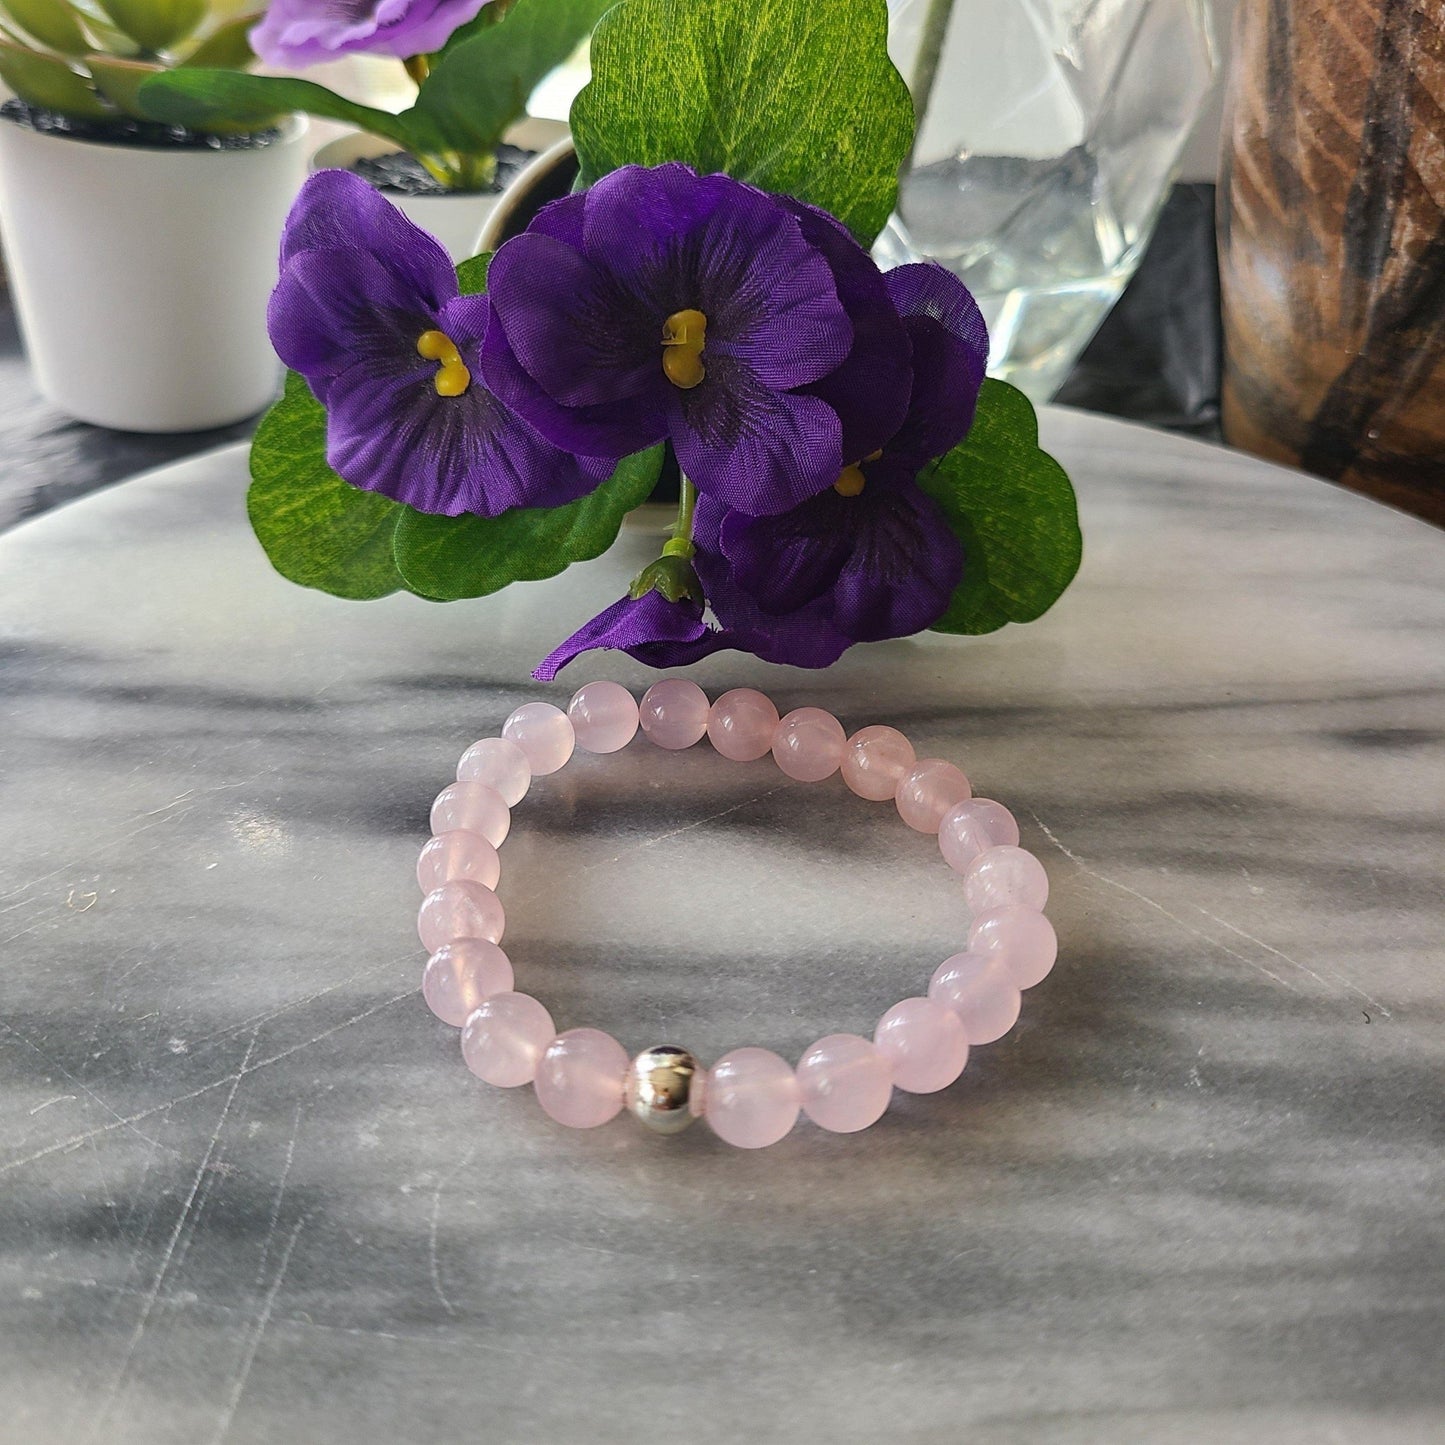 Rose Quartz Gemstone Bracelet | Unconditional love, Self-love, and Kindness - Alora Boutique